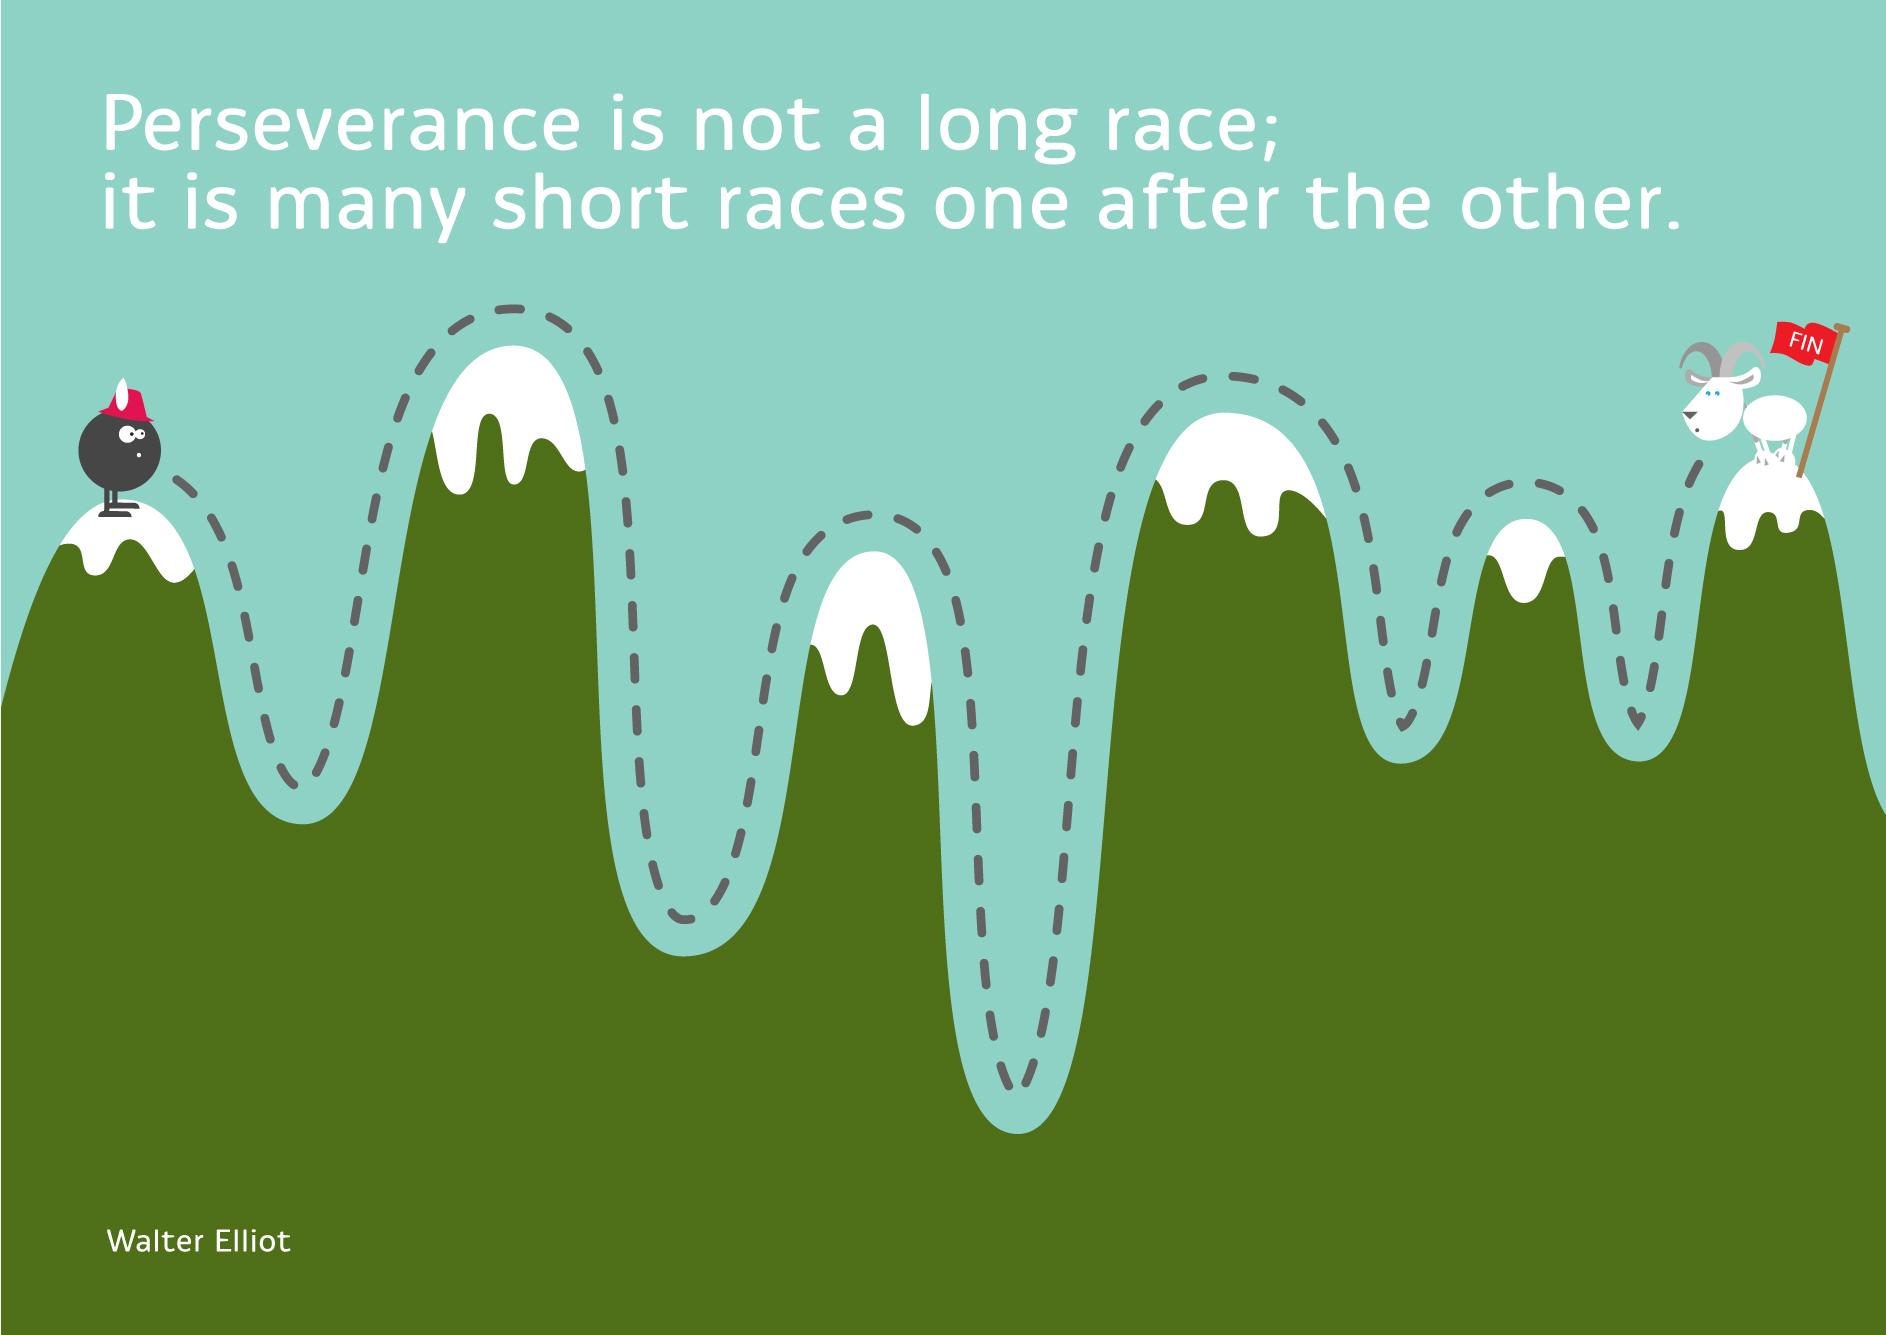 Perseverance is not a long race  Salamala